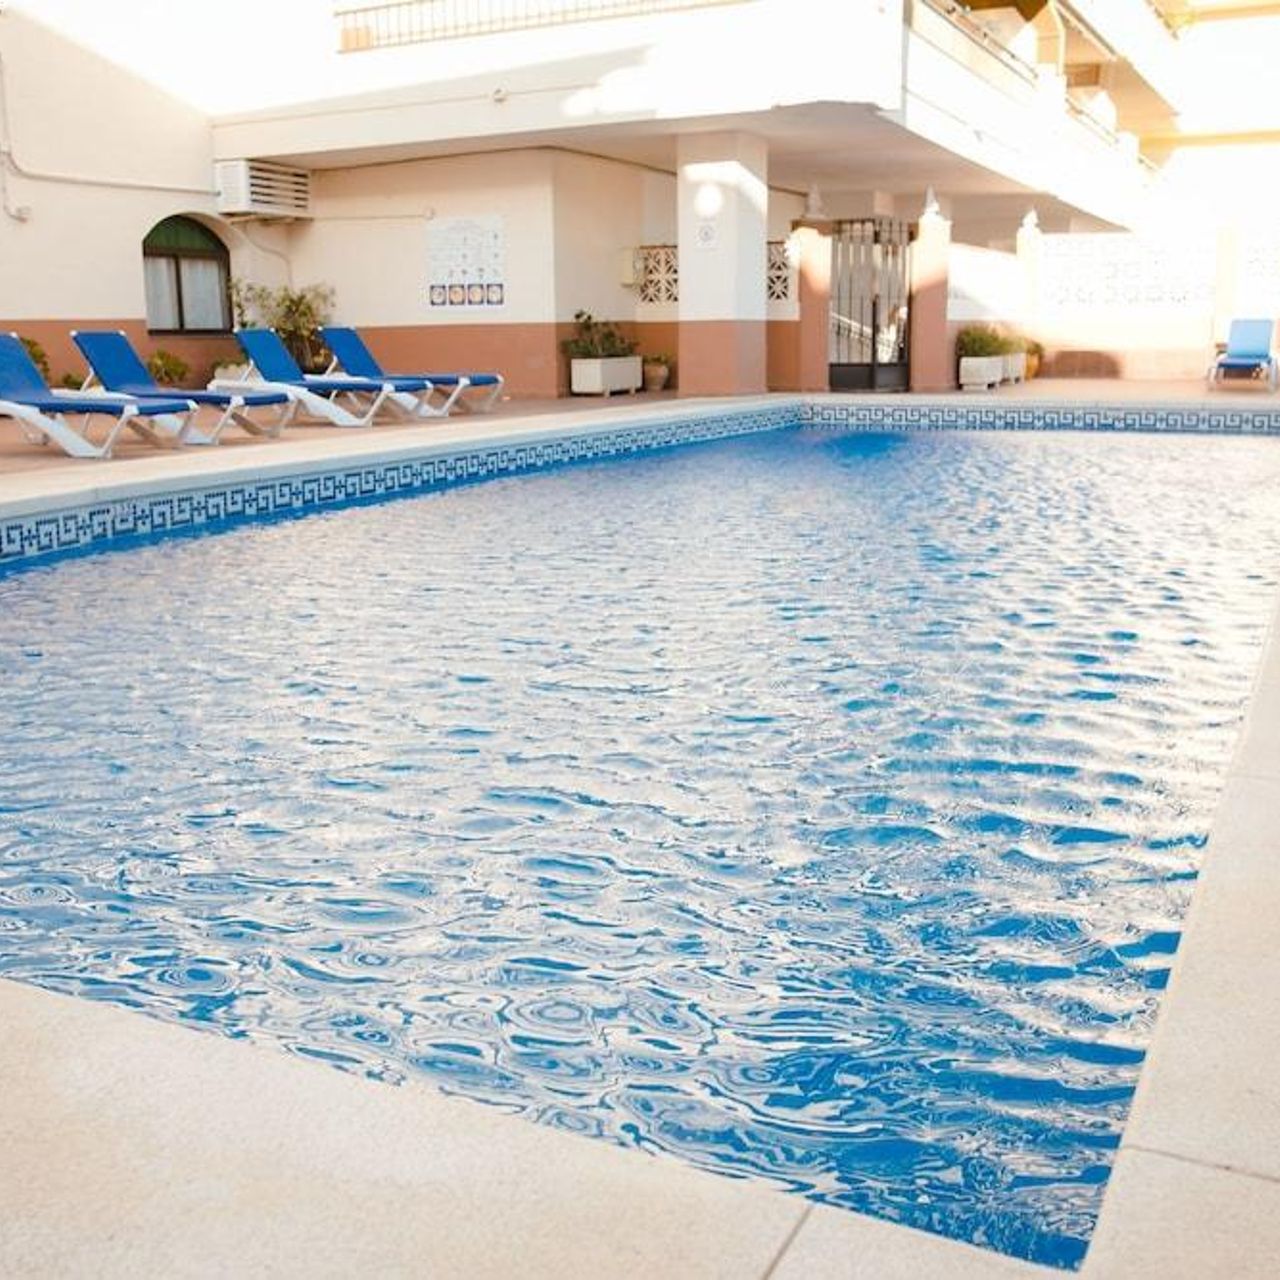 Hotel Las Rampas - Fuengirola - Great prices at HOTEL INFO